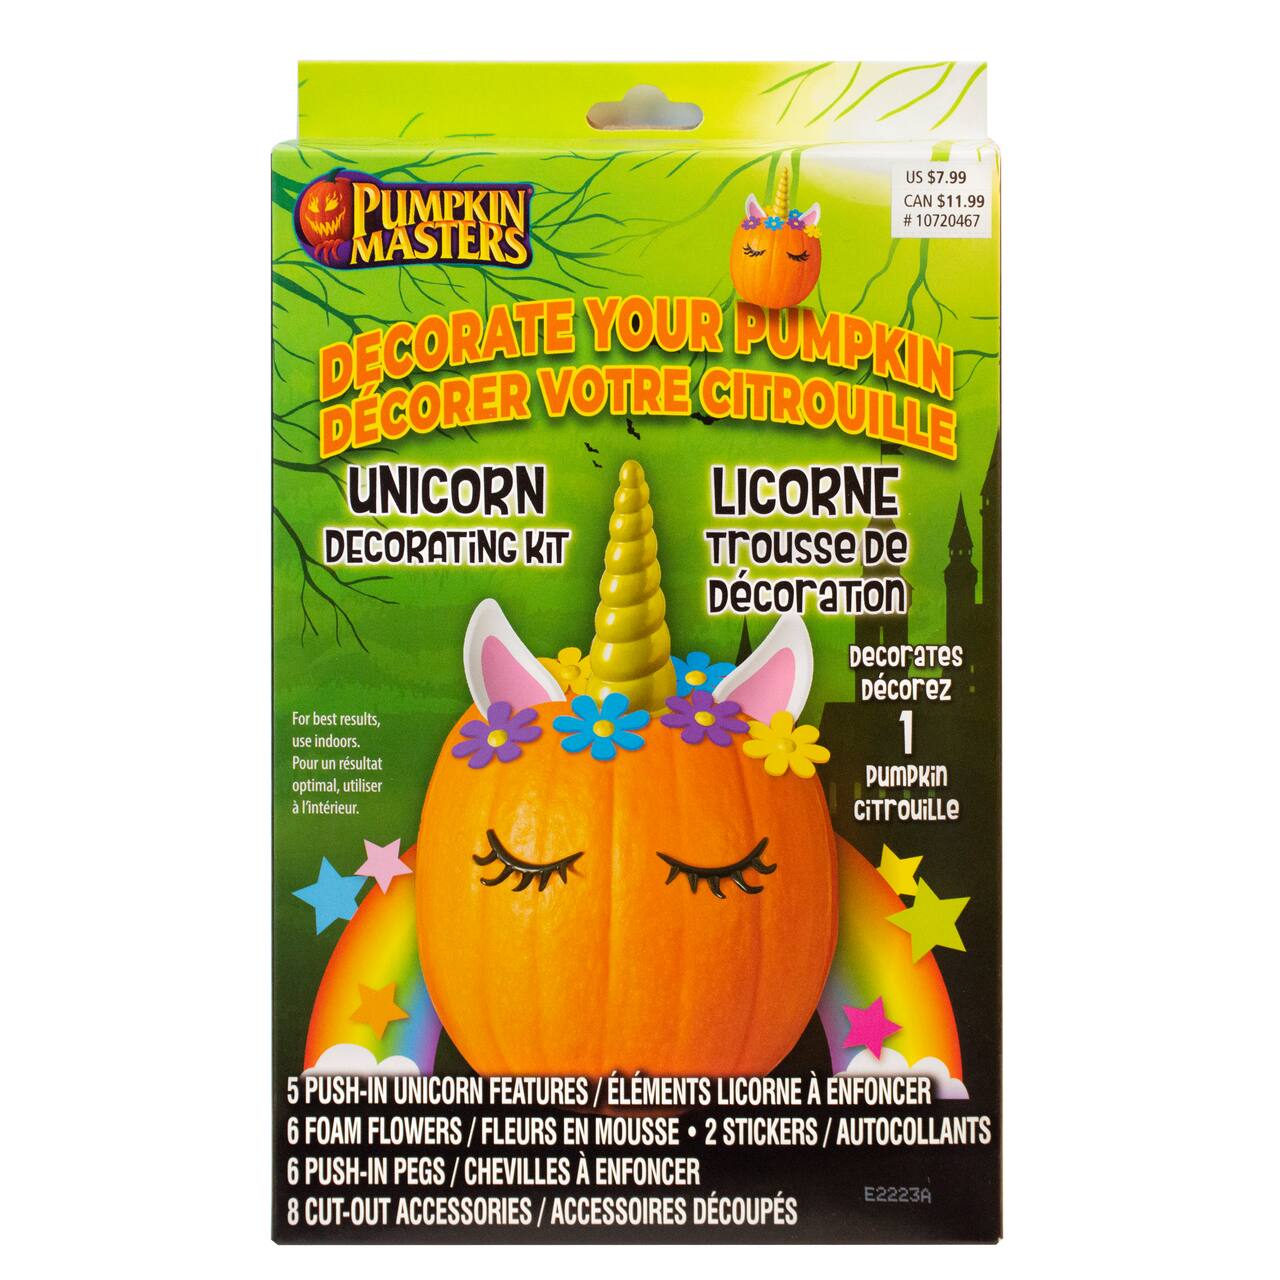 Pumpkin Master's Unicorn decorating kit